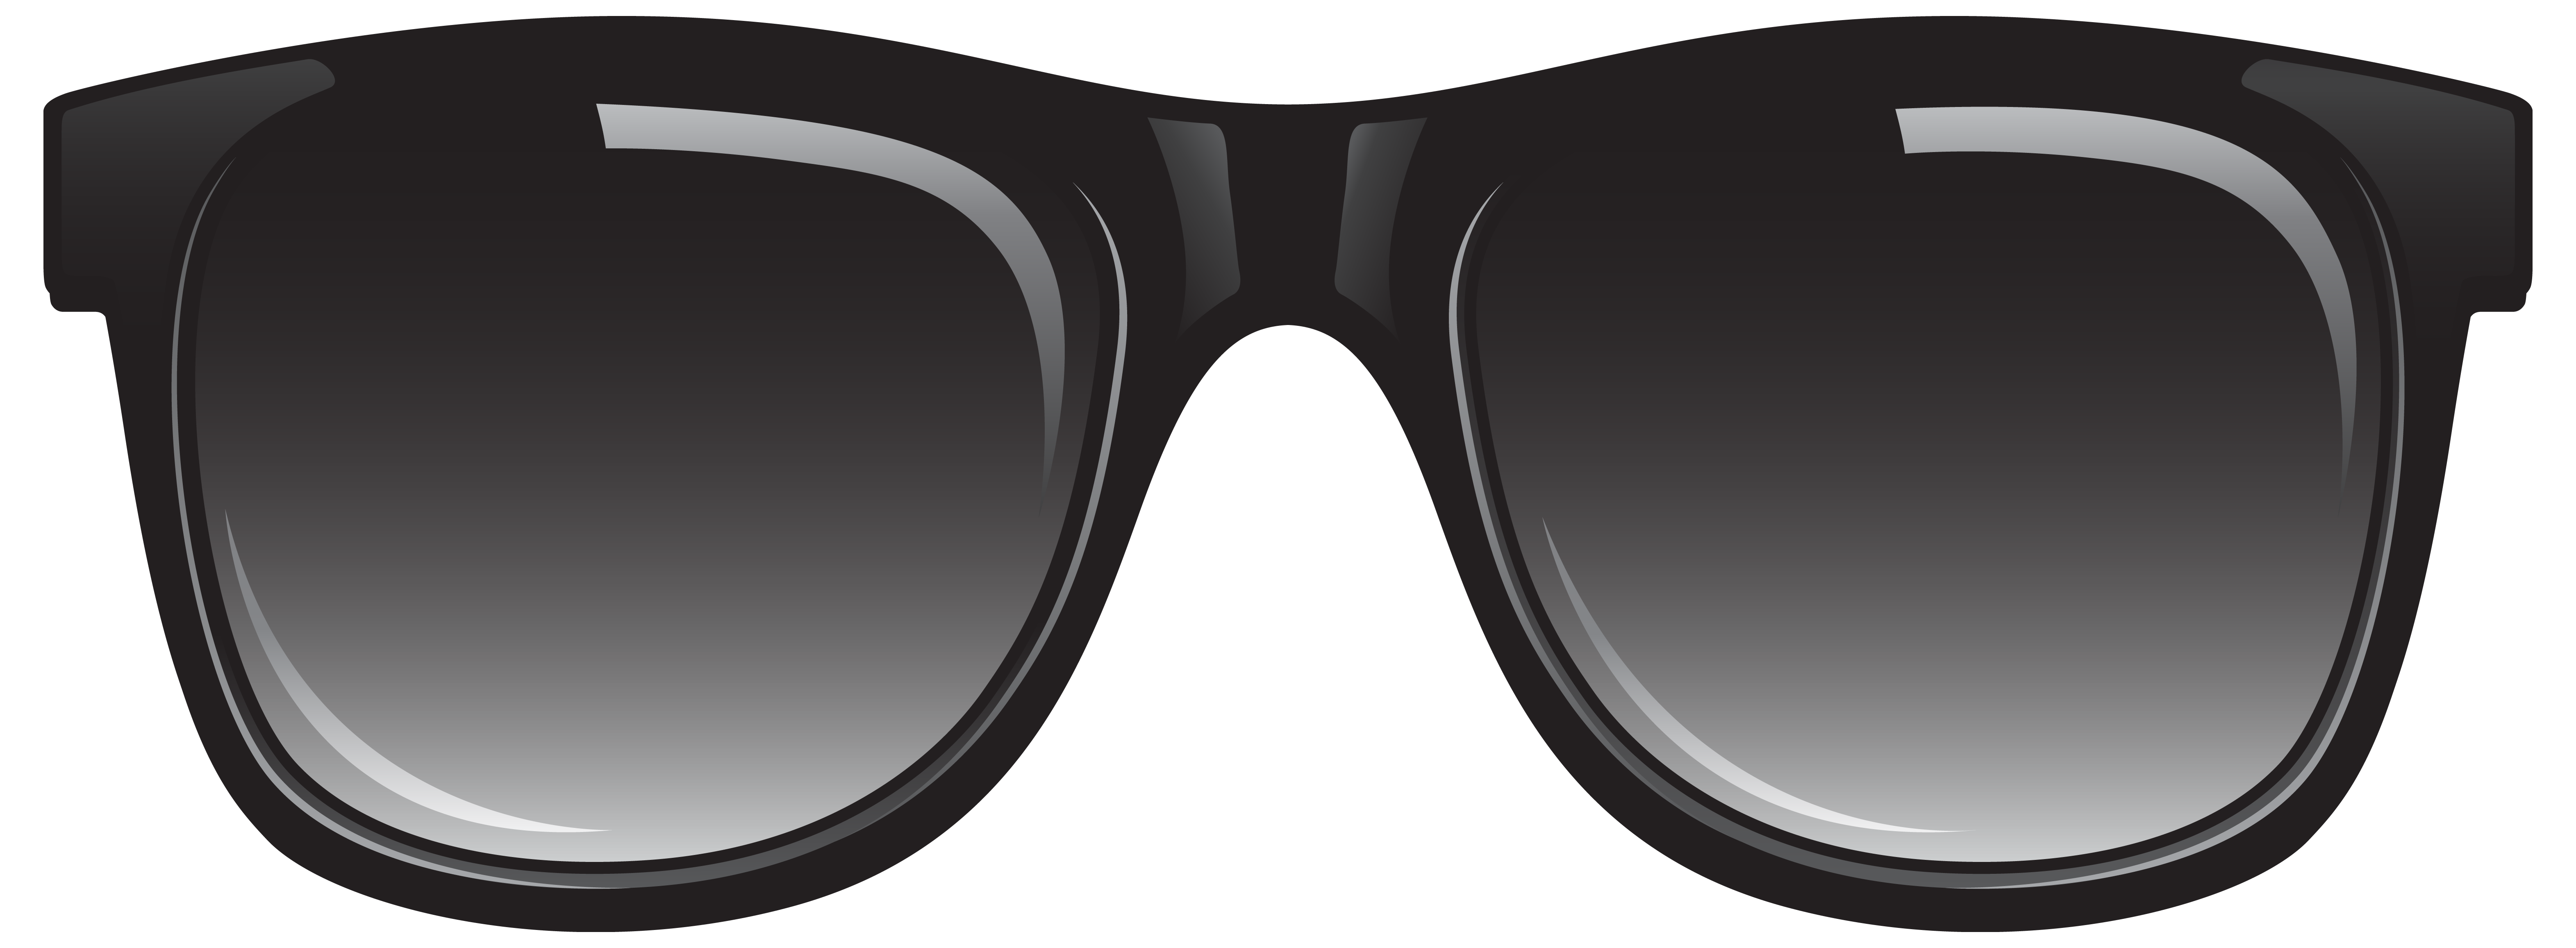 Wayfarer Sunglasses Aviator File Ray-Ban Download Free Image Clipart